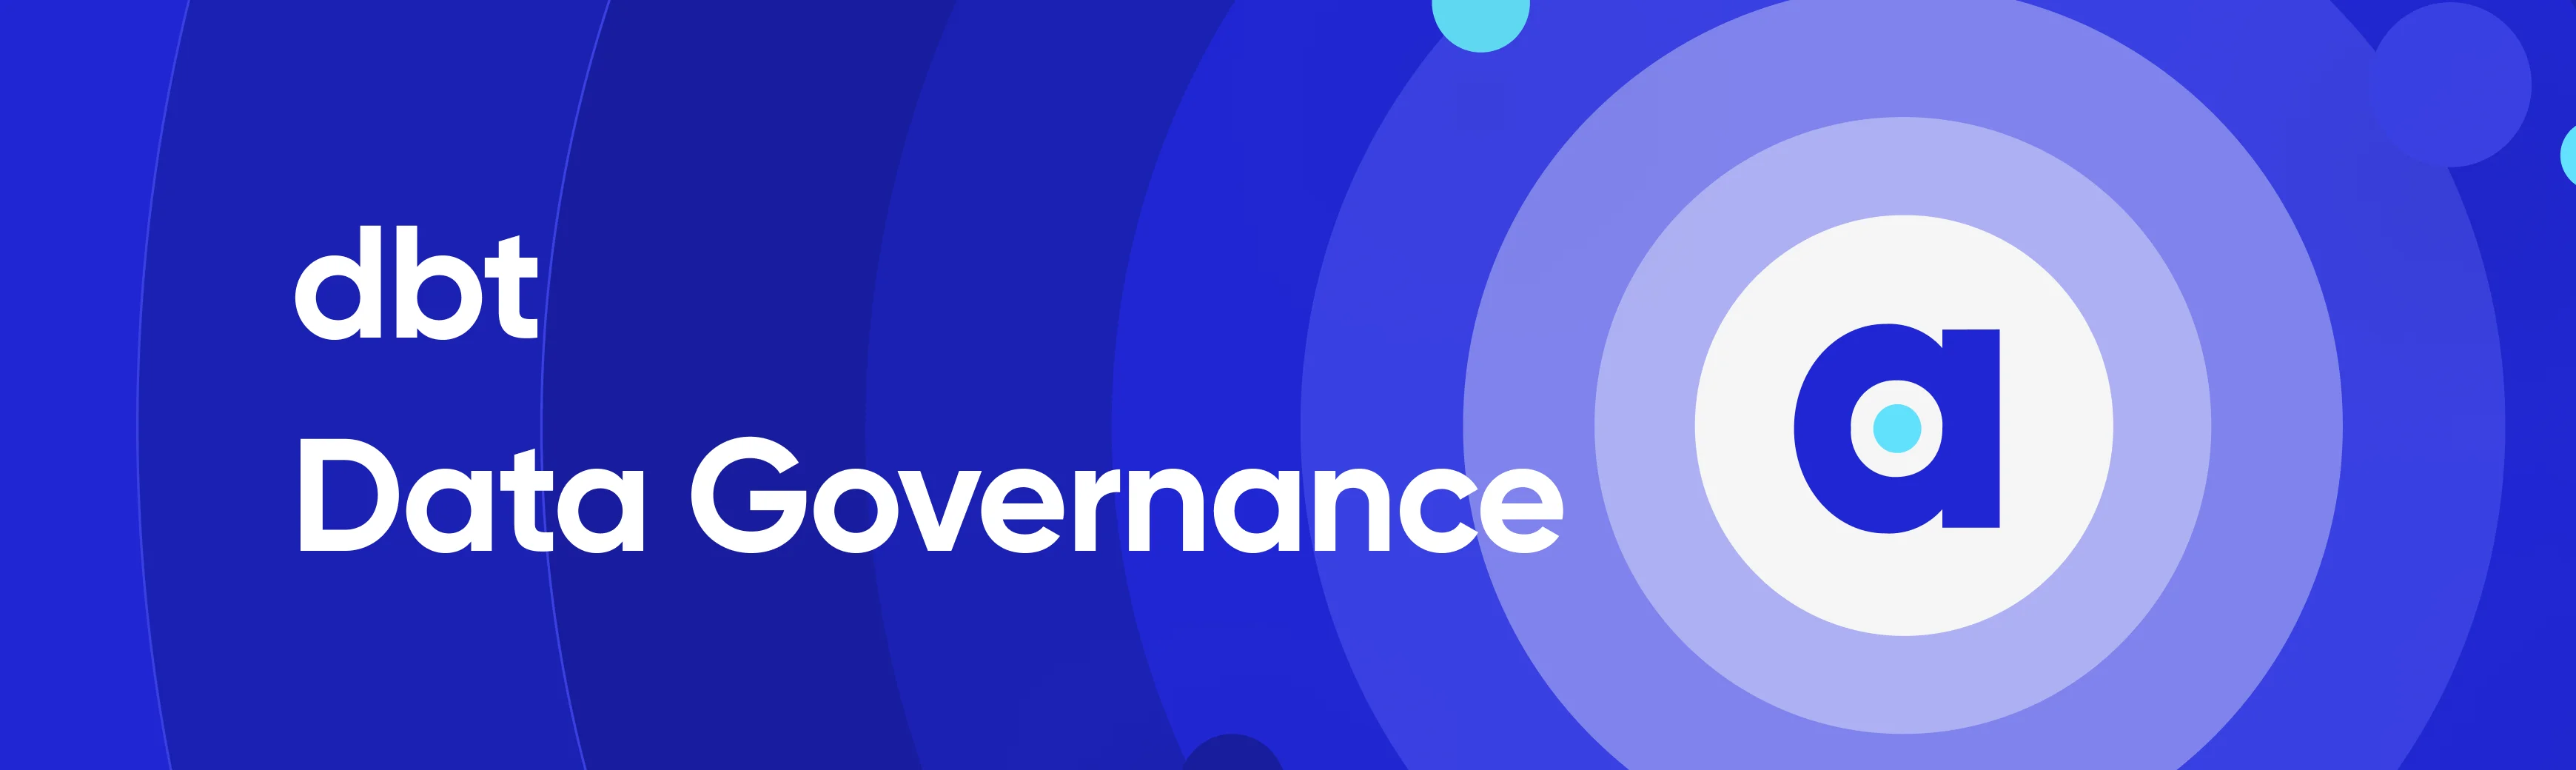 dbt Data Governance